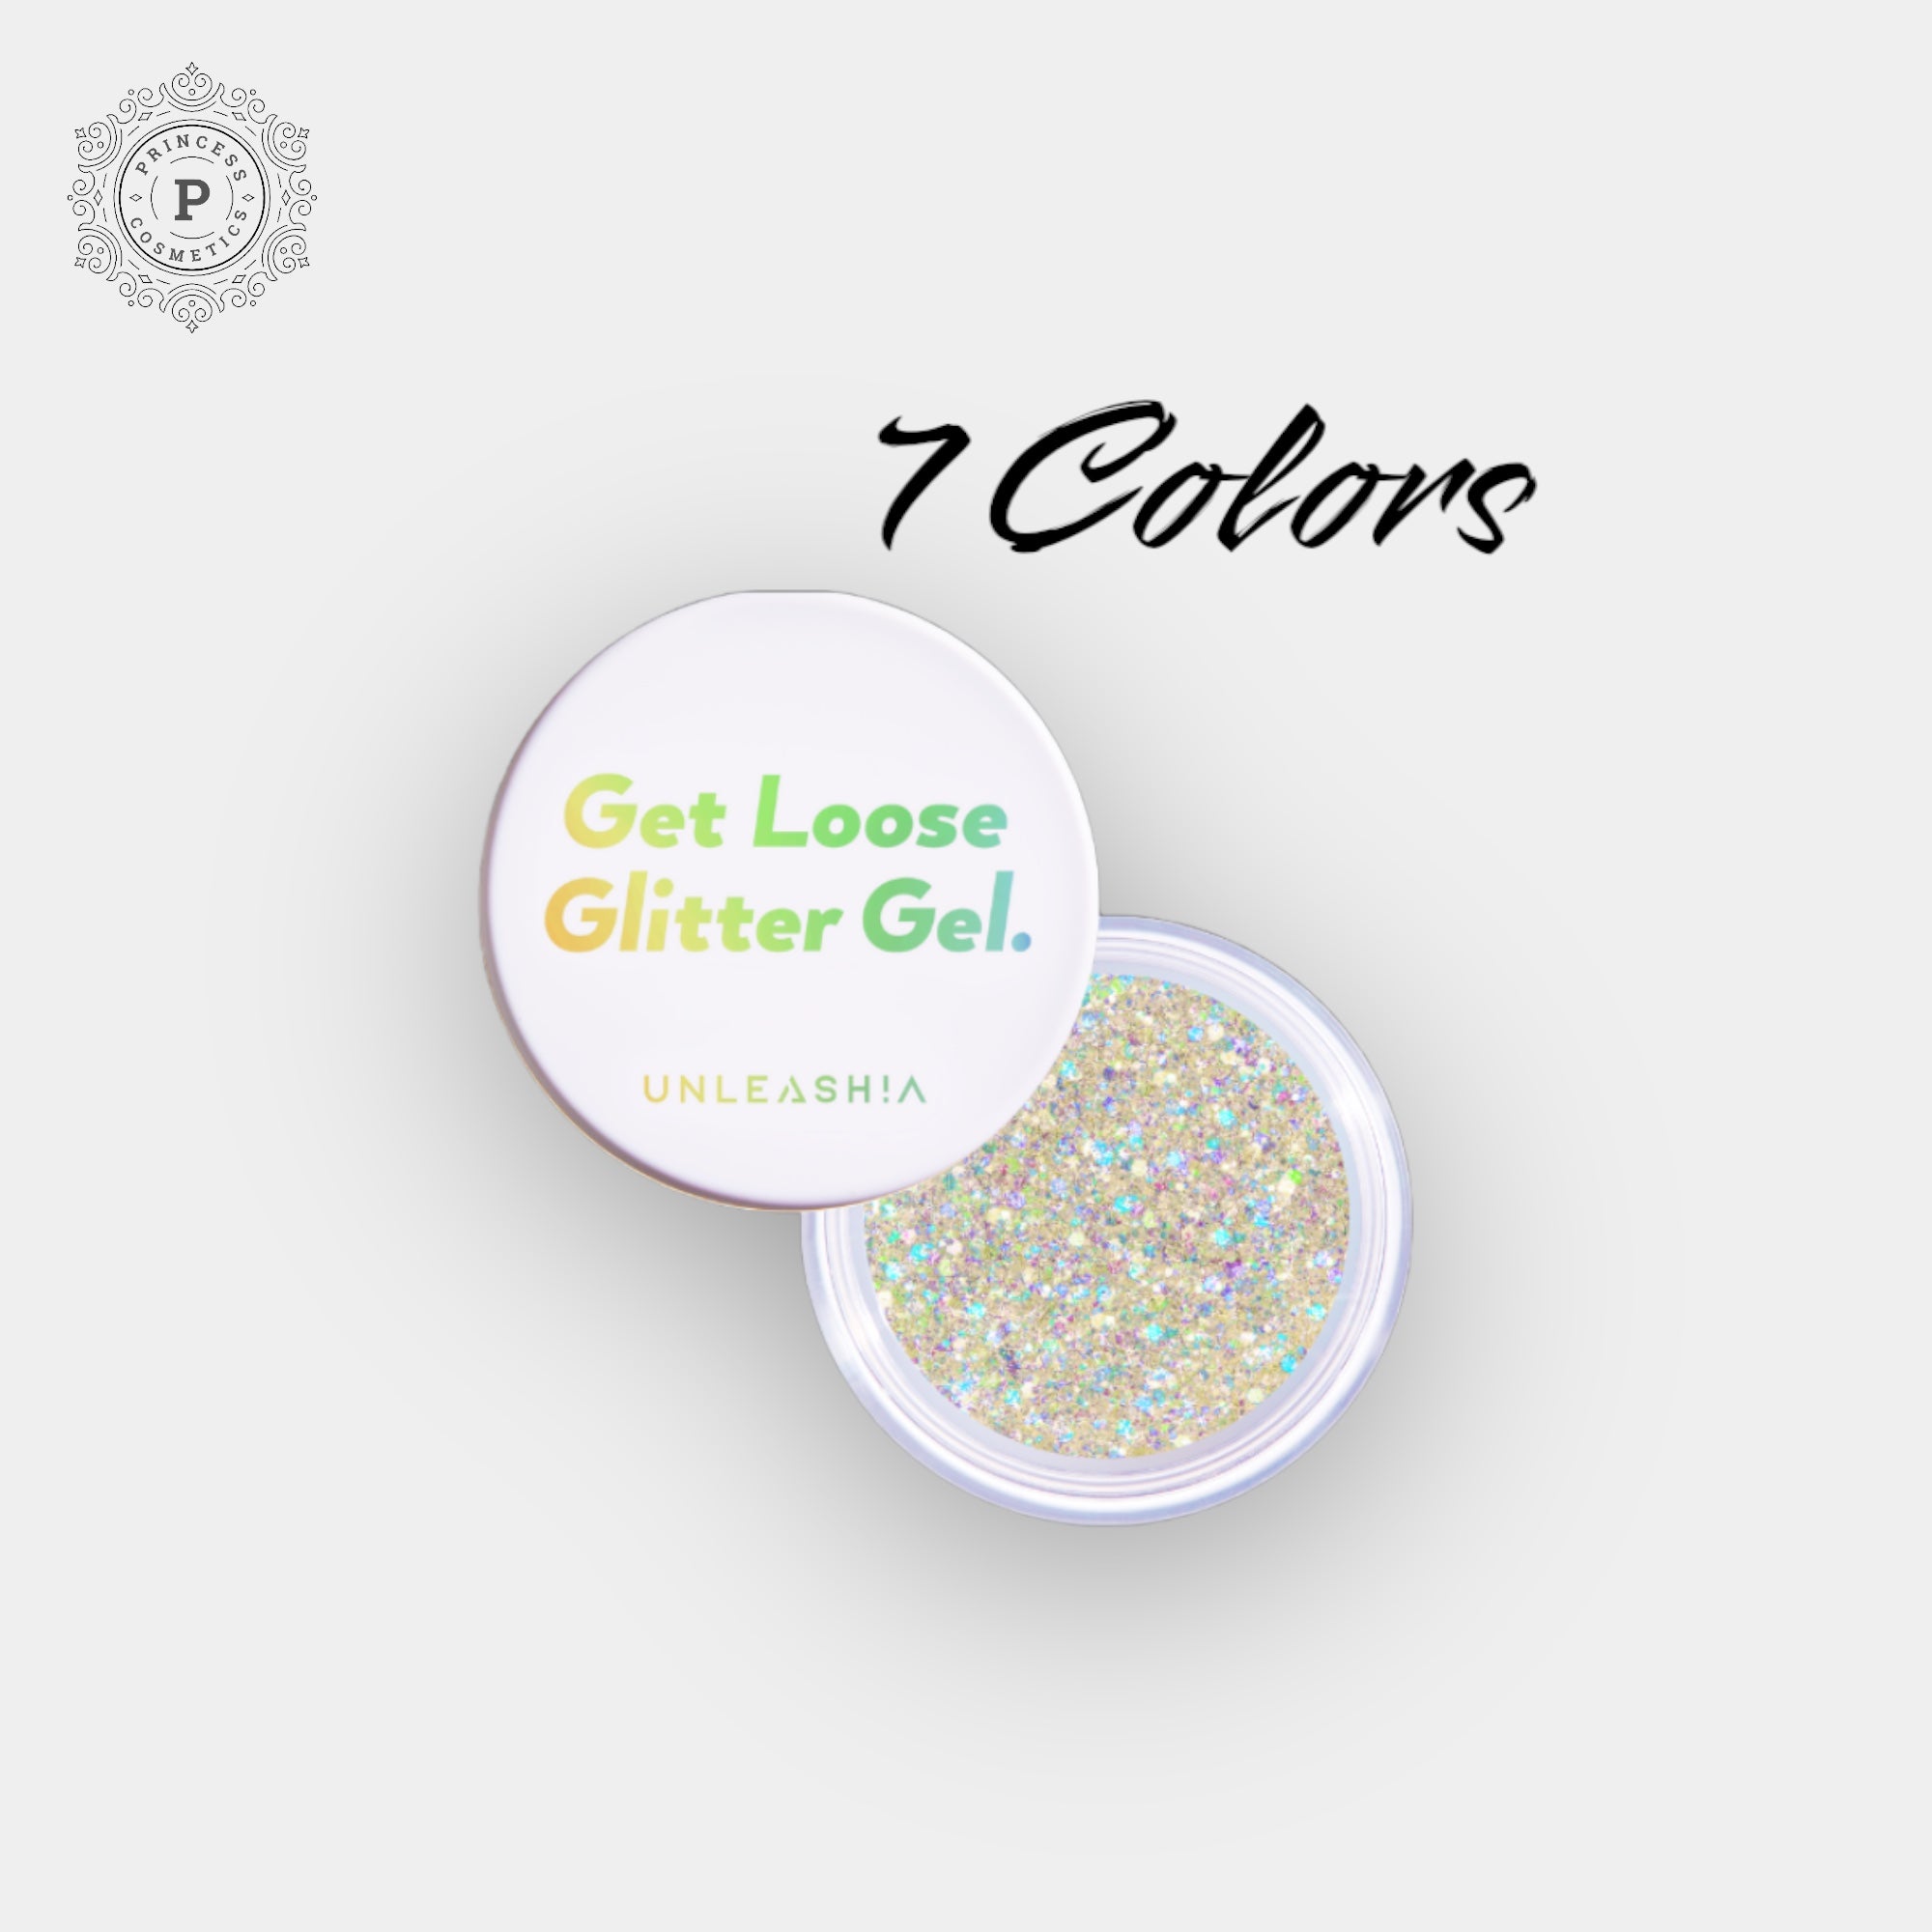 Unleashia Get Loose Glitter Gel (7 Colors) – Princess Cosmetics Qatar